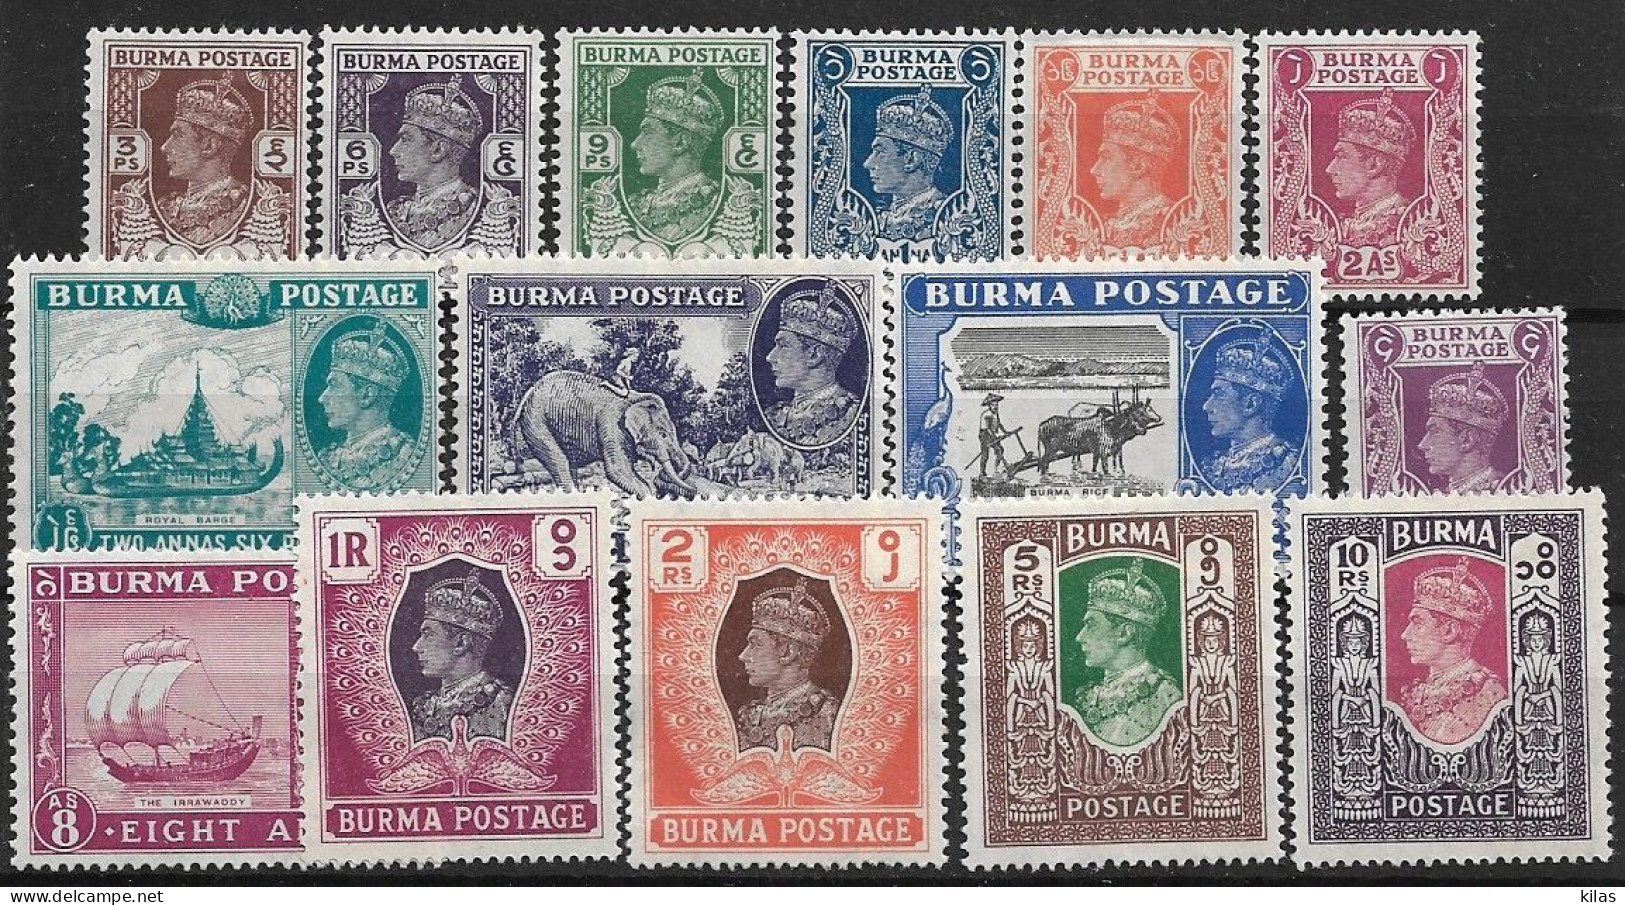 BURMA (BIRMANIE) 1947 KING GEORGE V MH - Burma (...-1947)